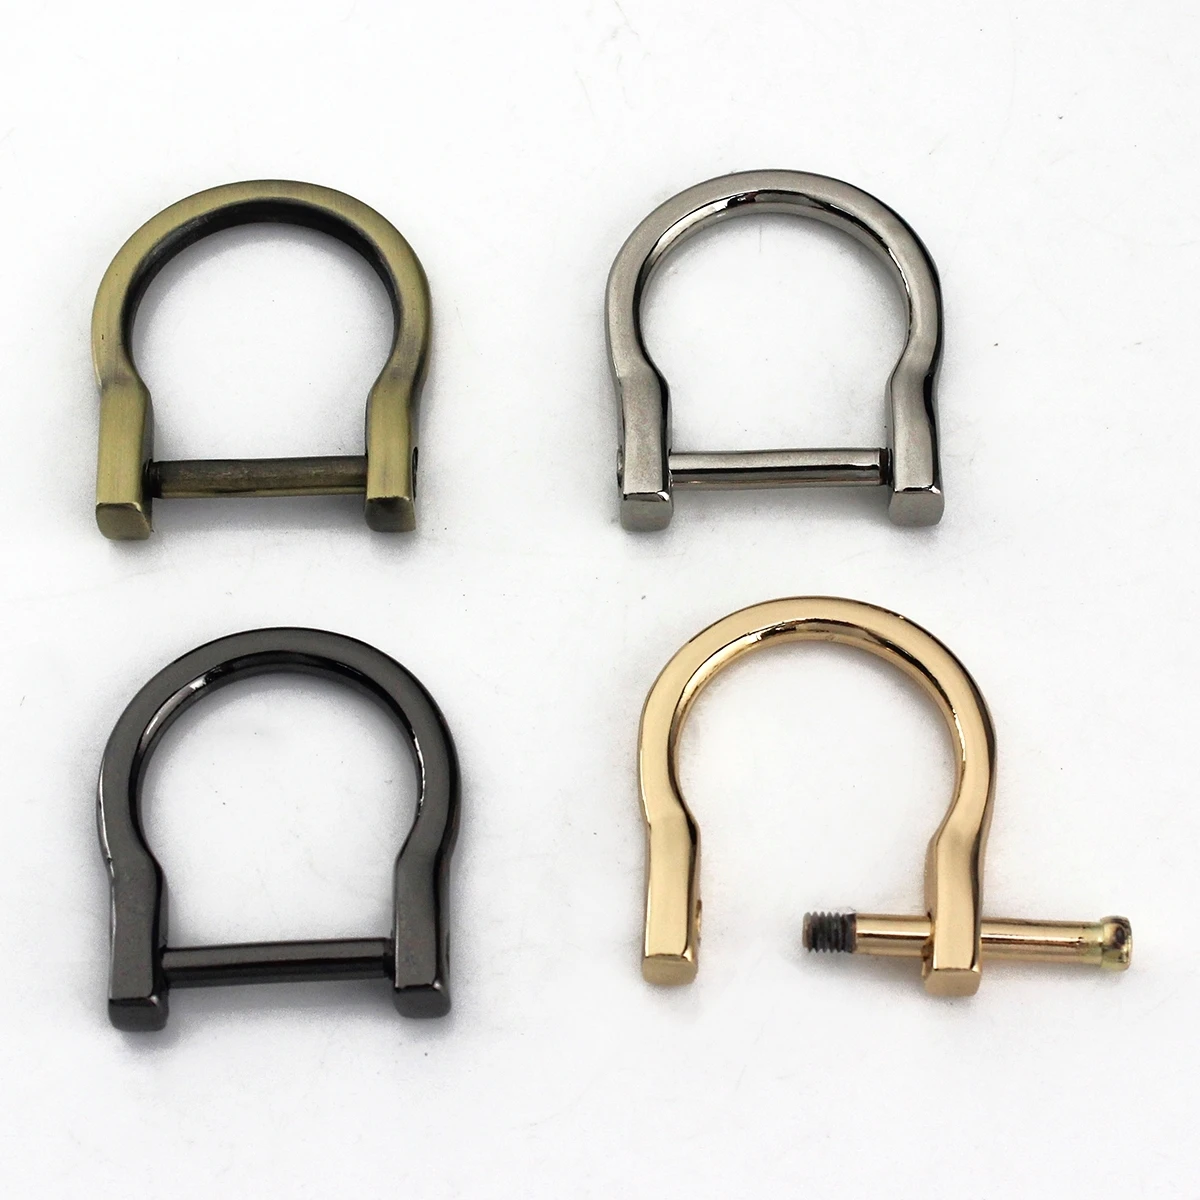 1piece Metal Detachable removable open screw D Ring buckle shackle clasp Leather Craft Bag strap belt handle shoulder webbing images - 6